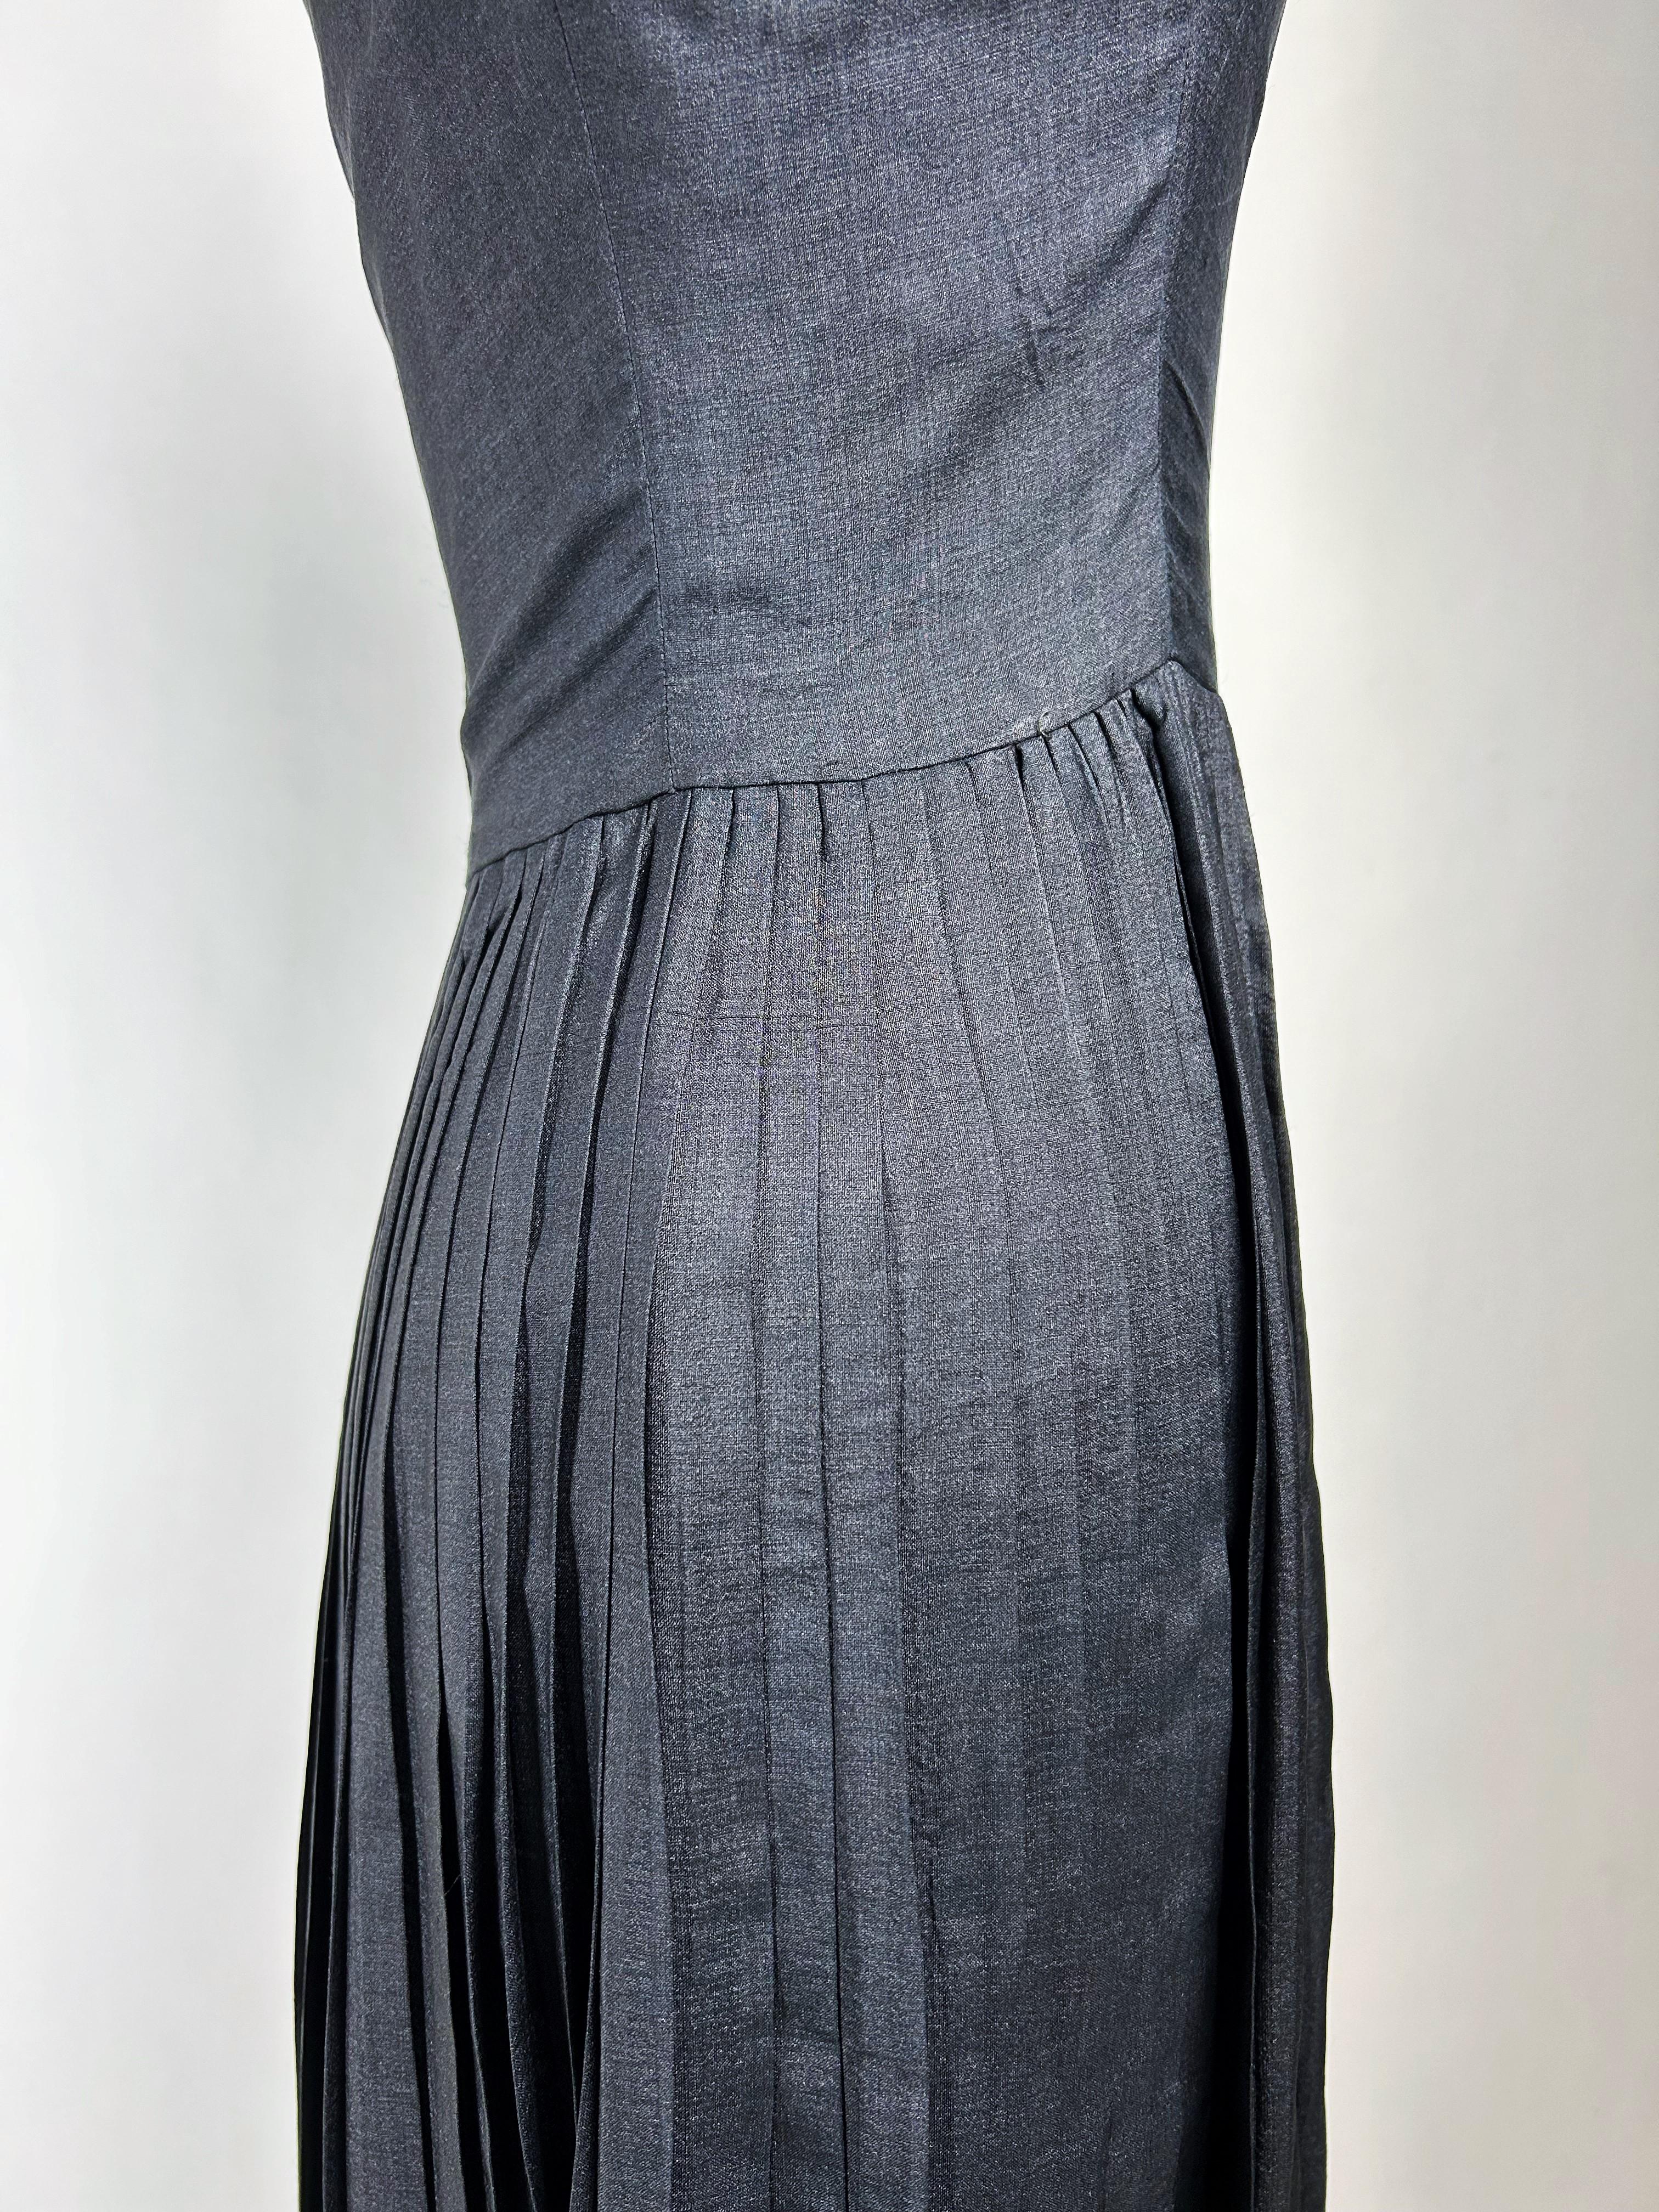 A Christian Dior New-York Grey Silk Dress and Jacket Circa 1958 For Sale 4